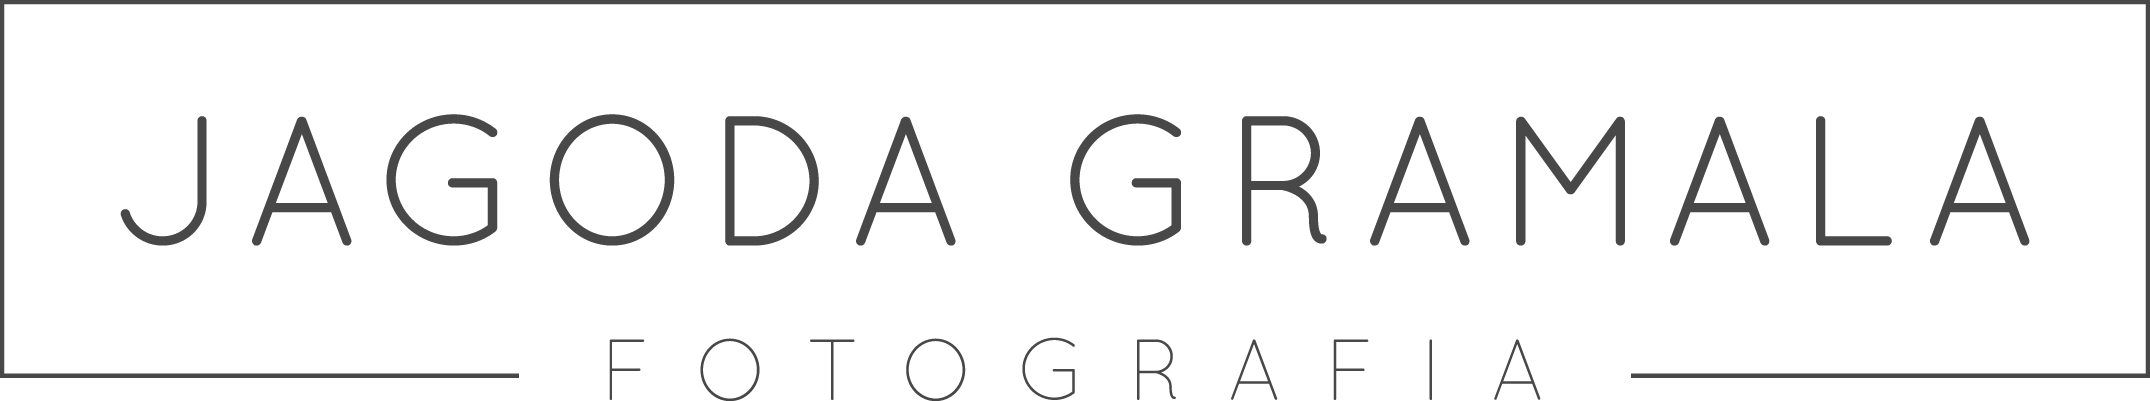 jagoda Gramala fotografia logo